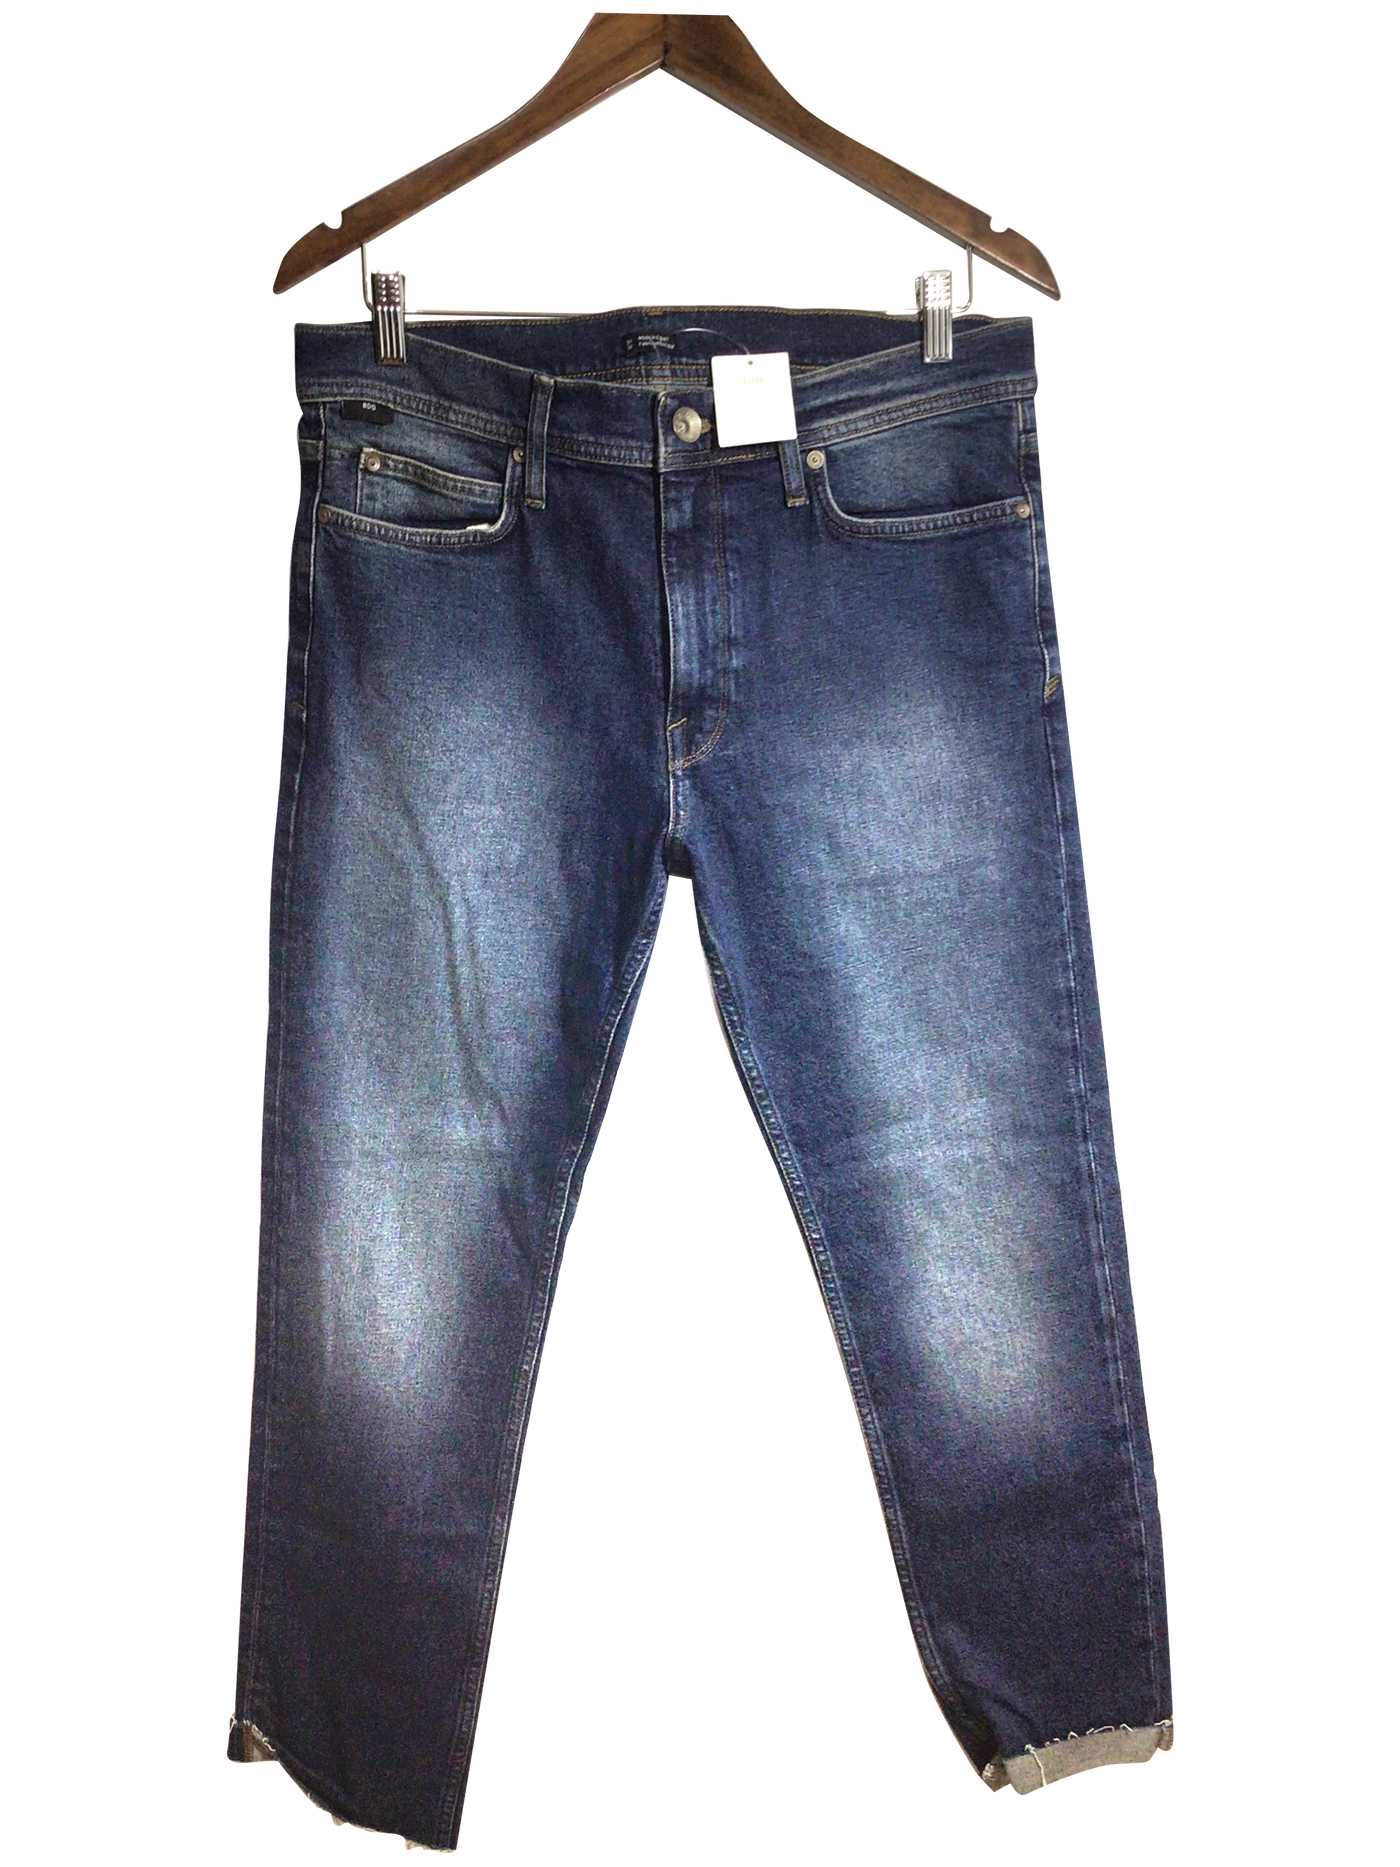 URBAN OUTFITTERS Men Straight-Legged Jeans Regular fit in Blue - Size 34x30 | 15 $ KOOP